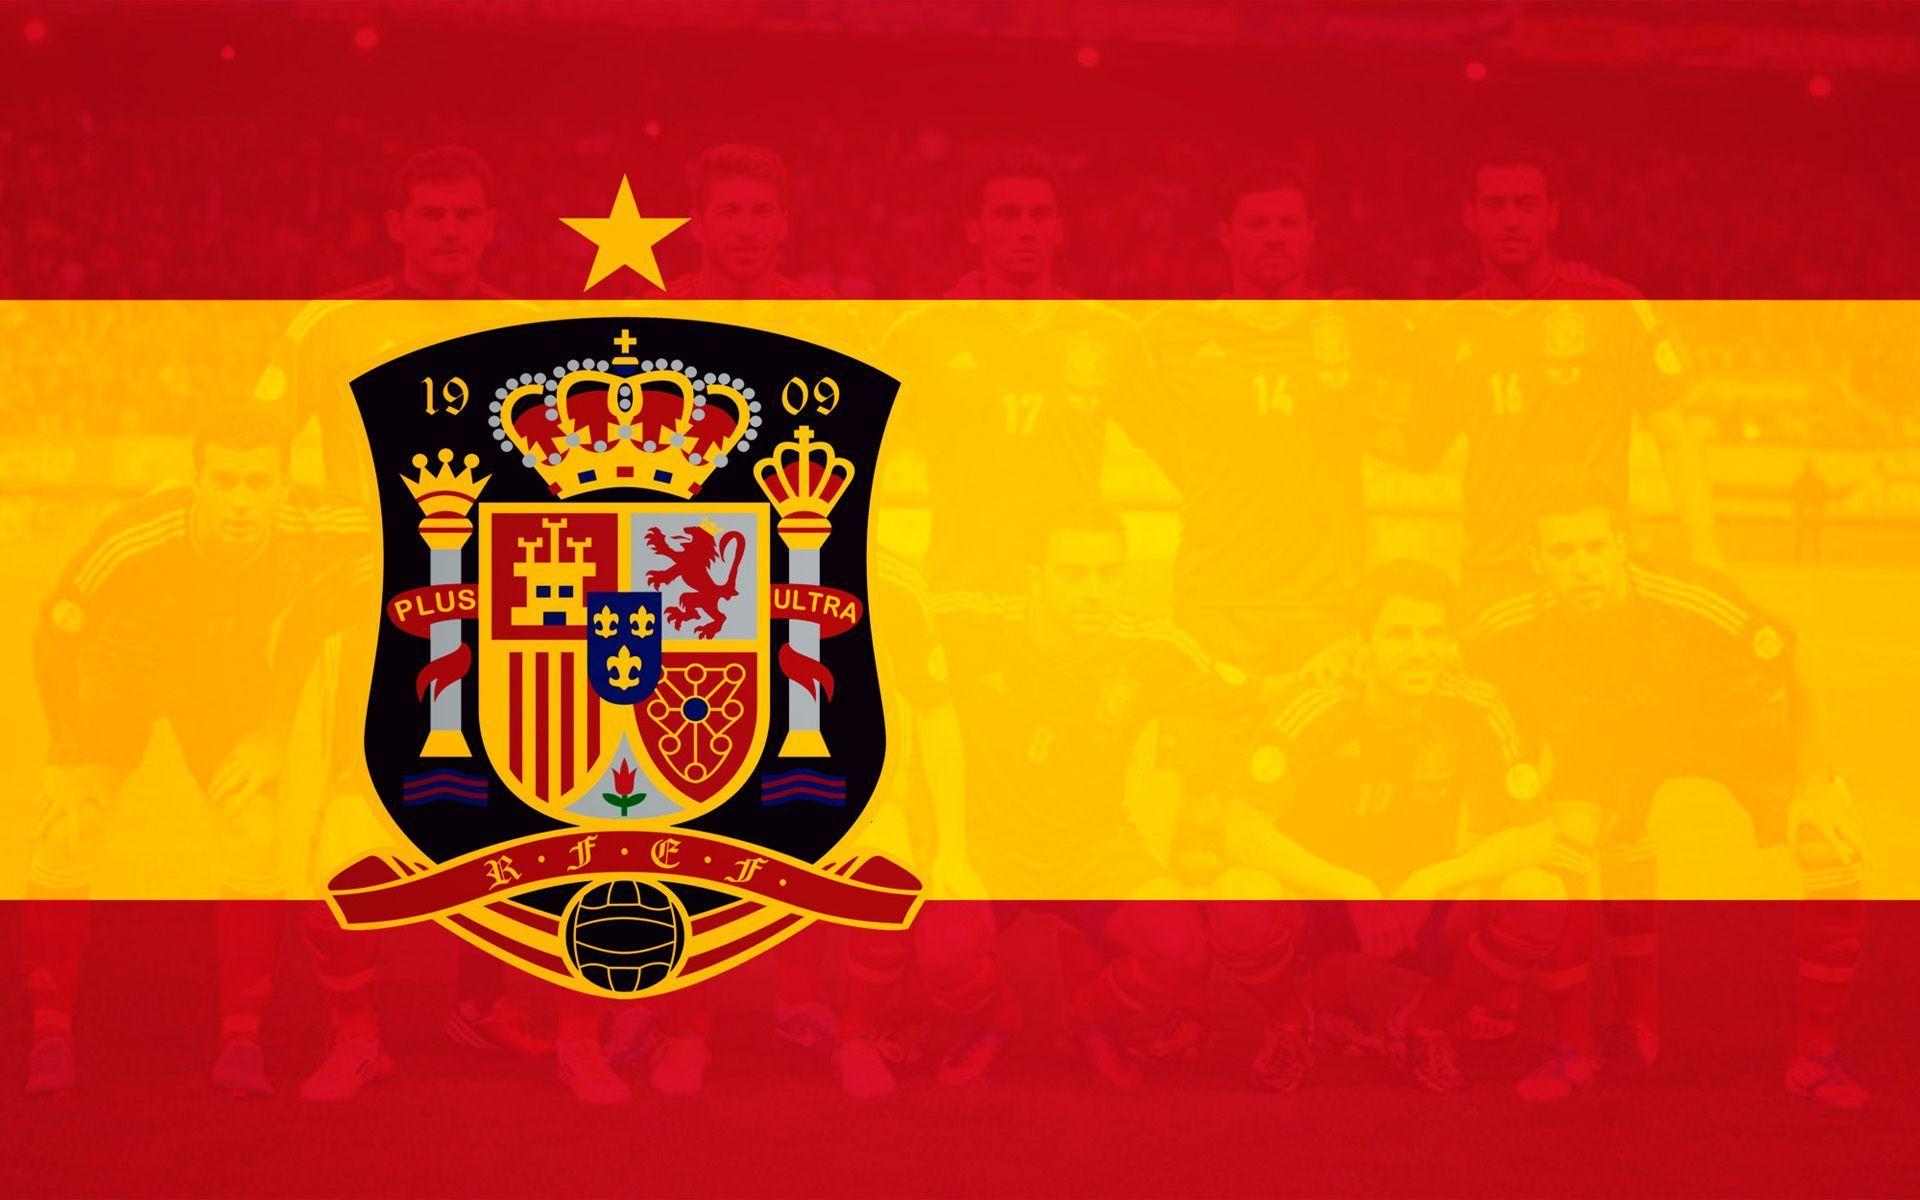 Spain National Team 2014 wallpaper